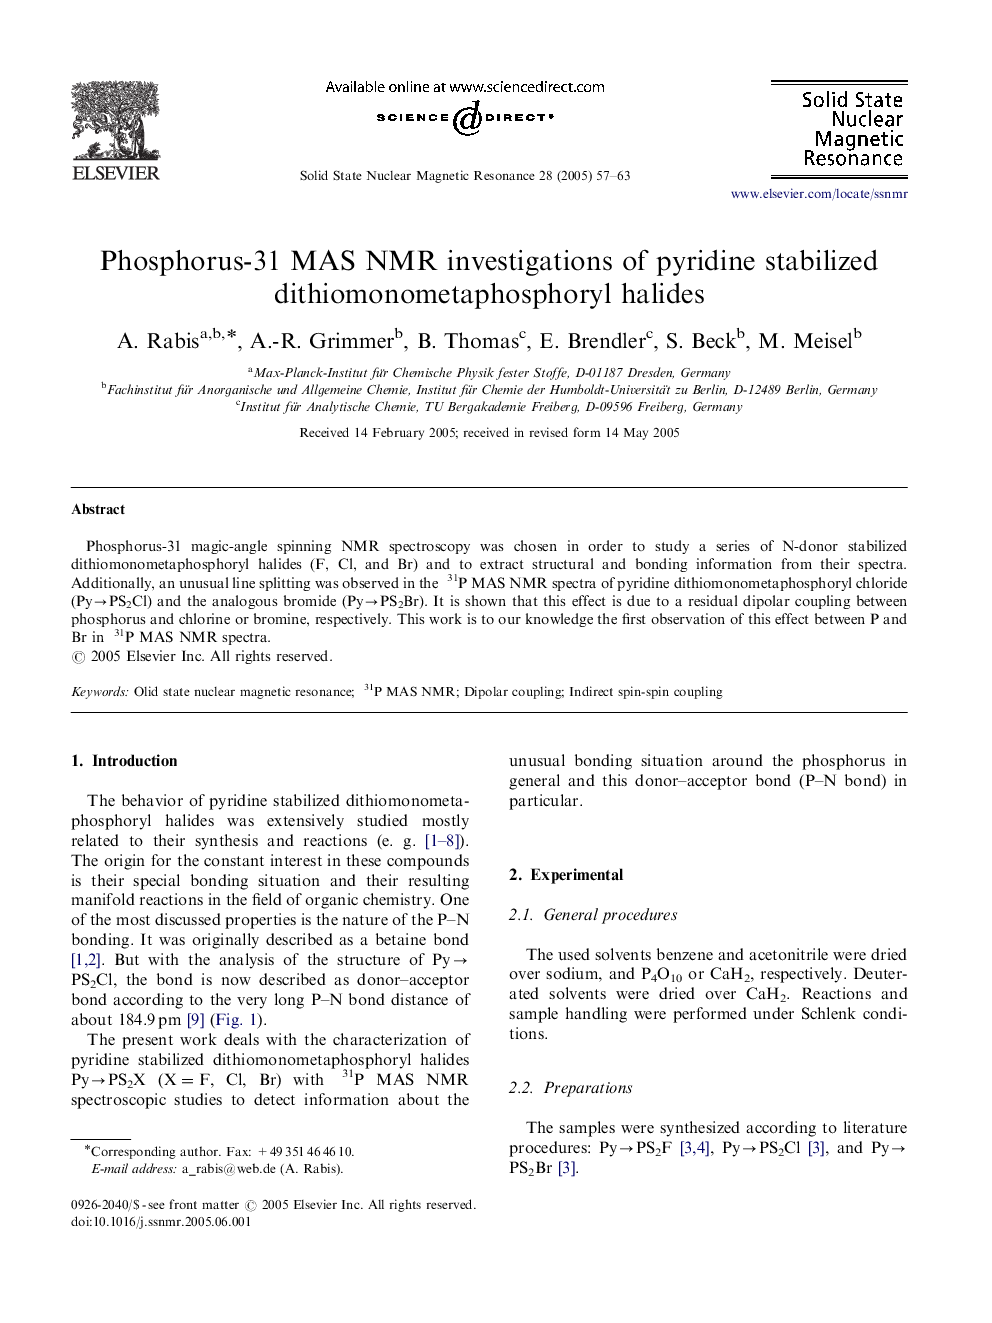 Phosphorus-31 MAS NMR investigations of pyridine stabilized dithiomonometaphosphoryl halides